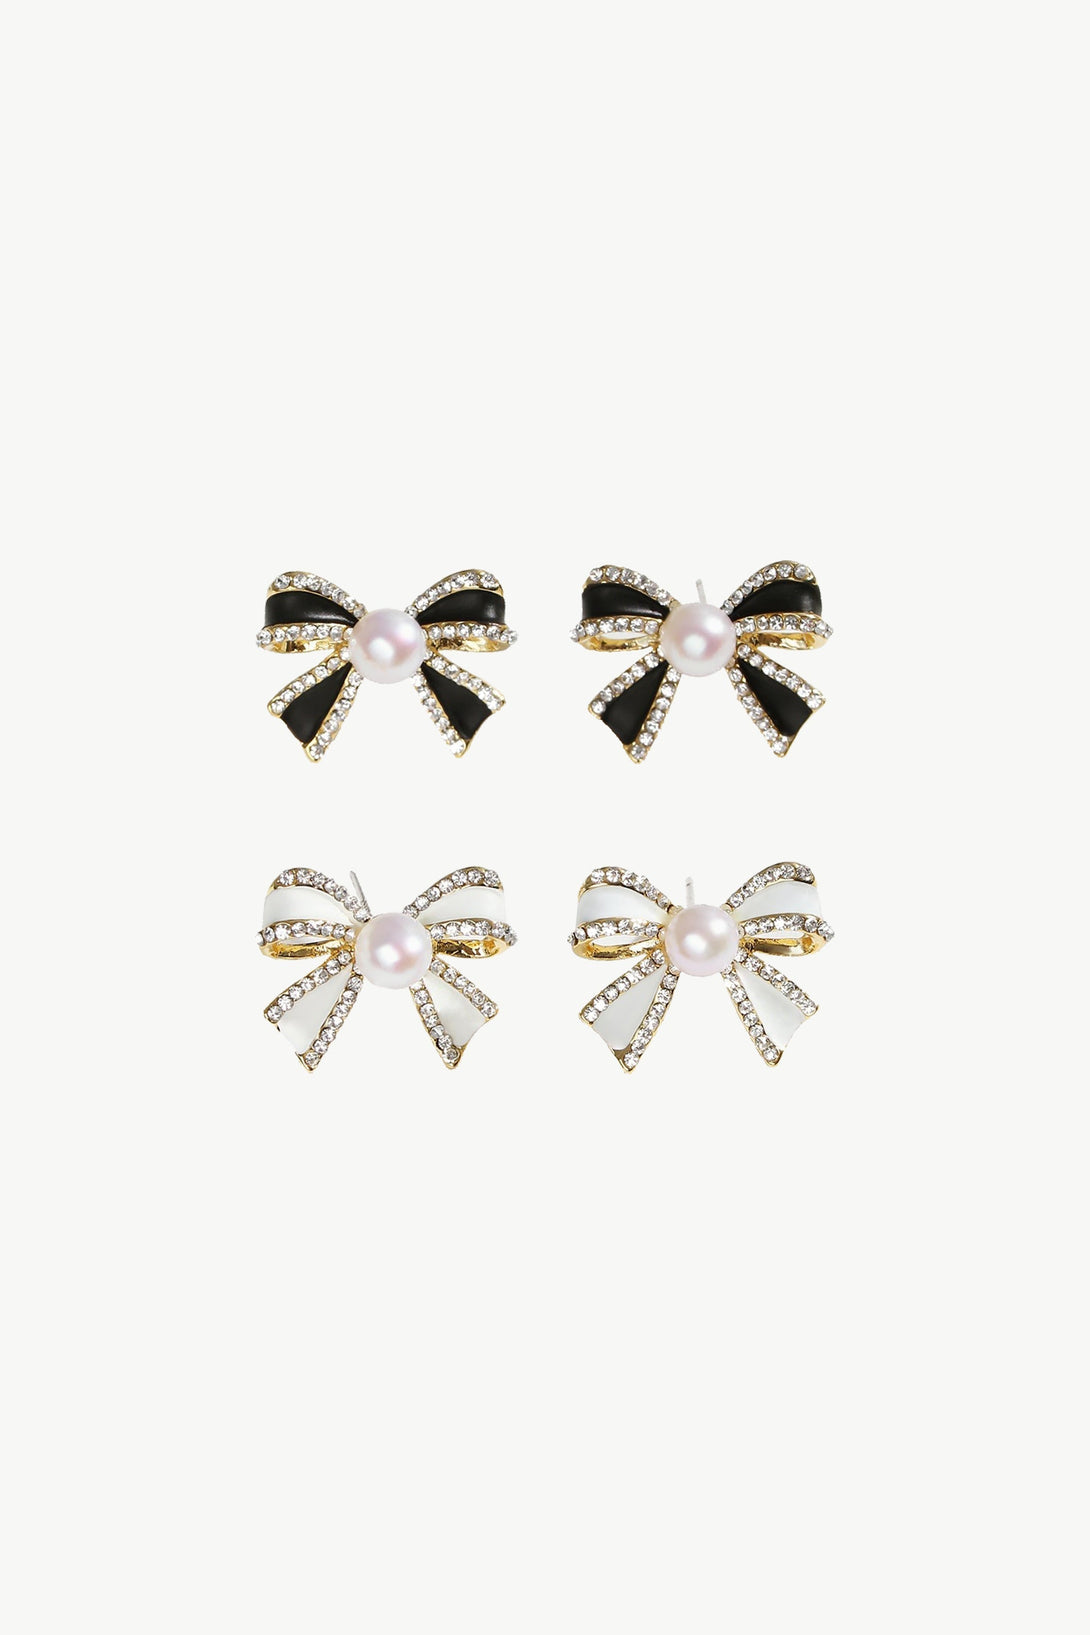 Cubic Zirconia Butterfly Studs Earrings Set - Classicharms